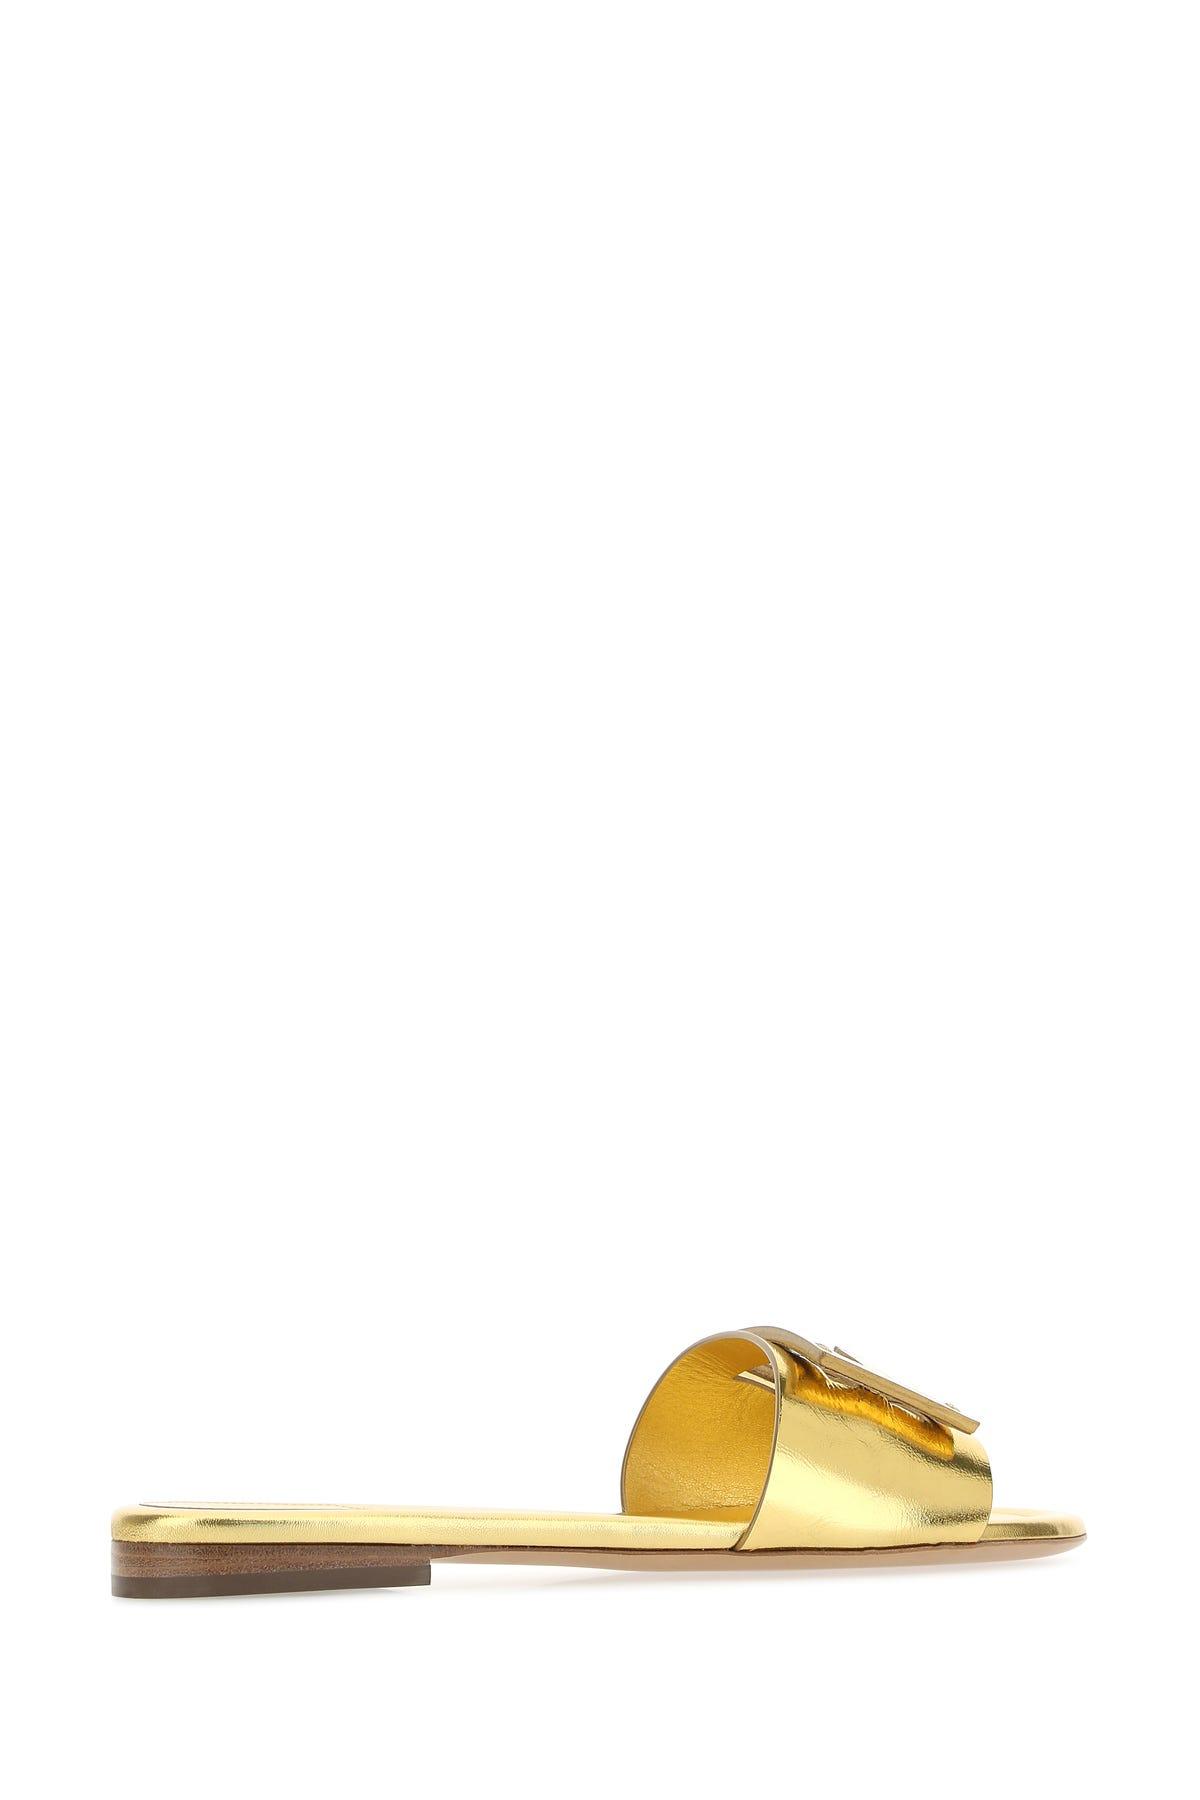 Fendi Gold Nappa Leather Slippers in Metallic | Lyst